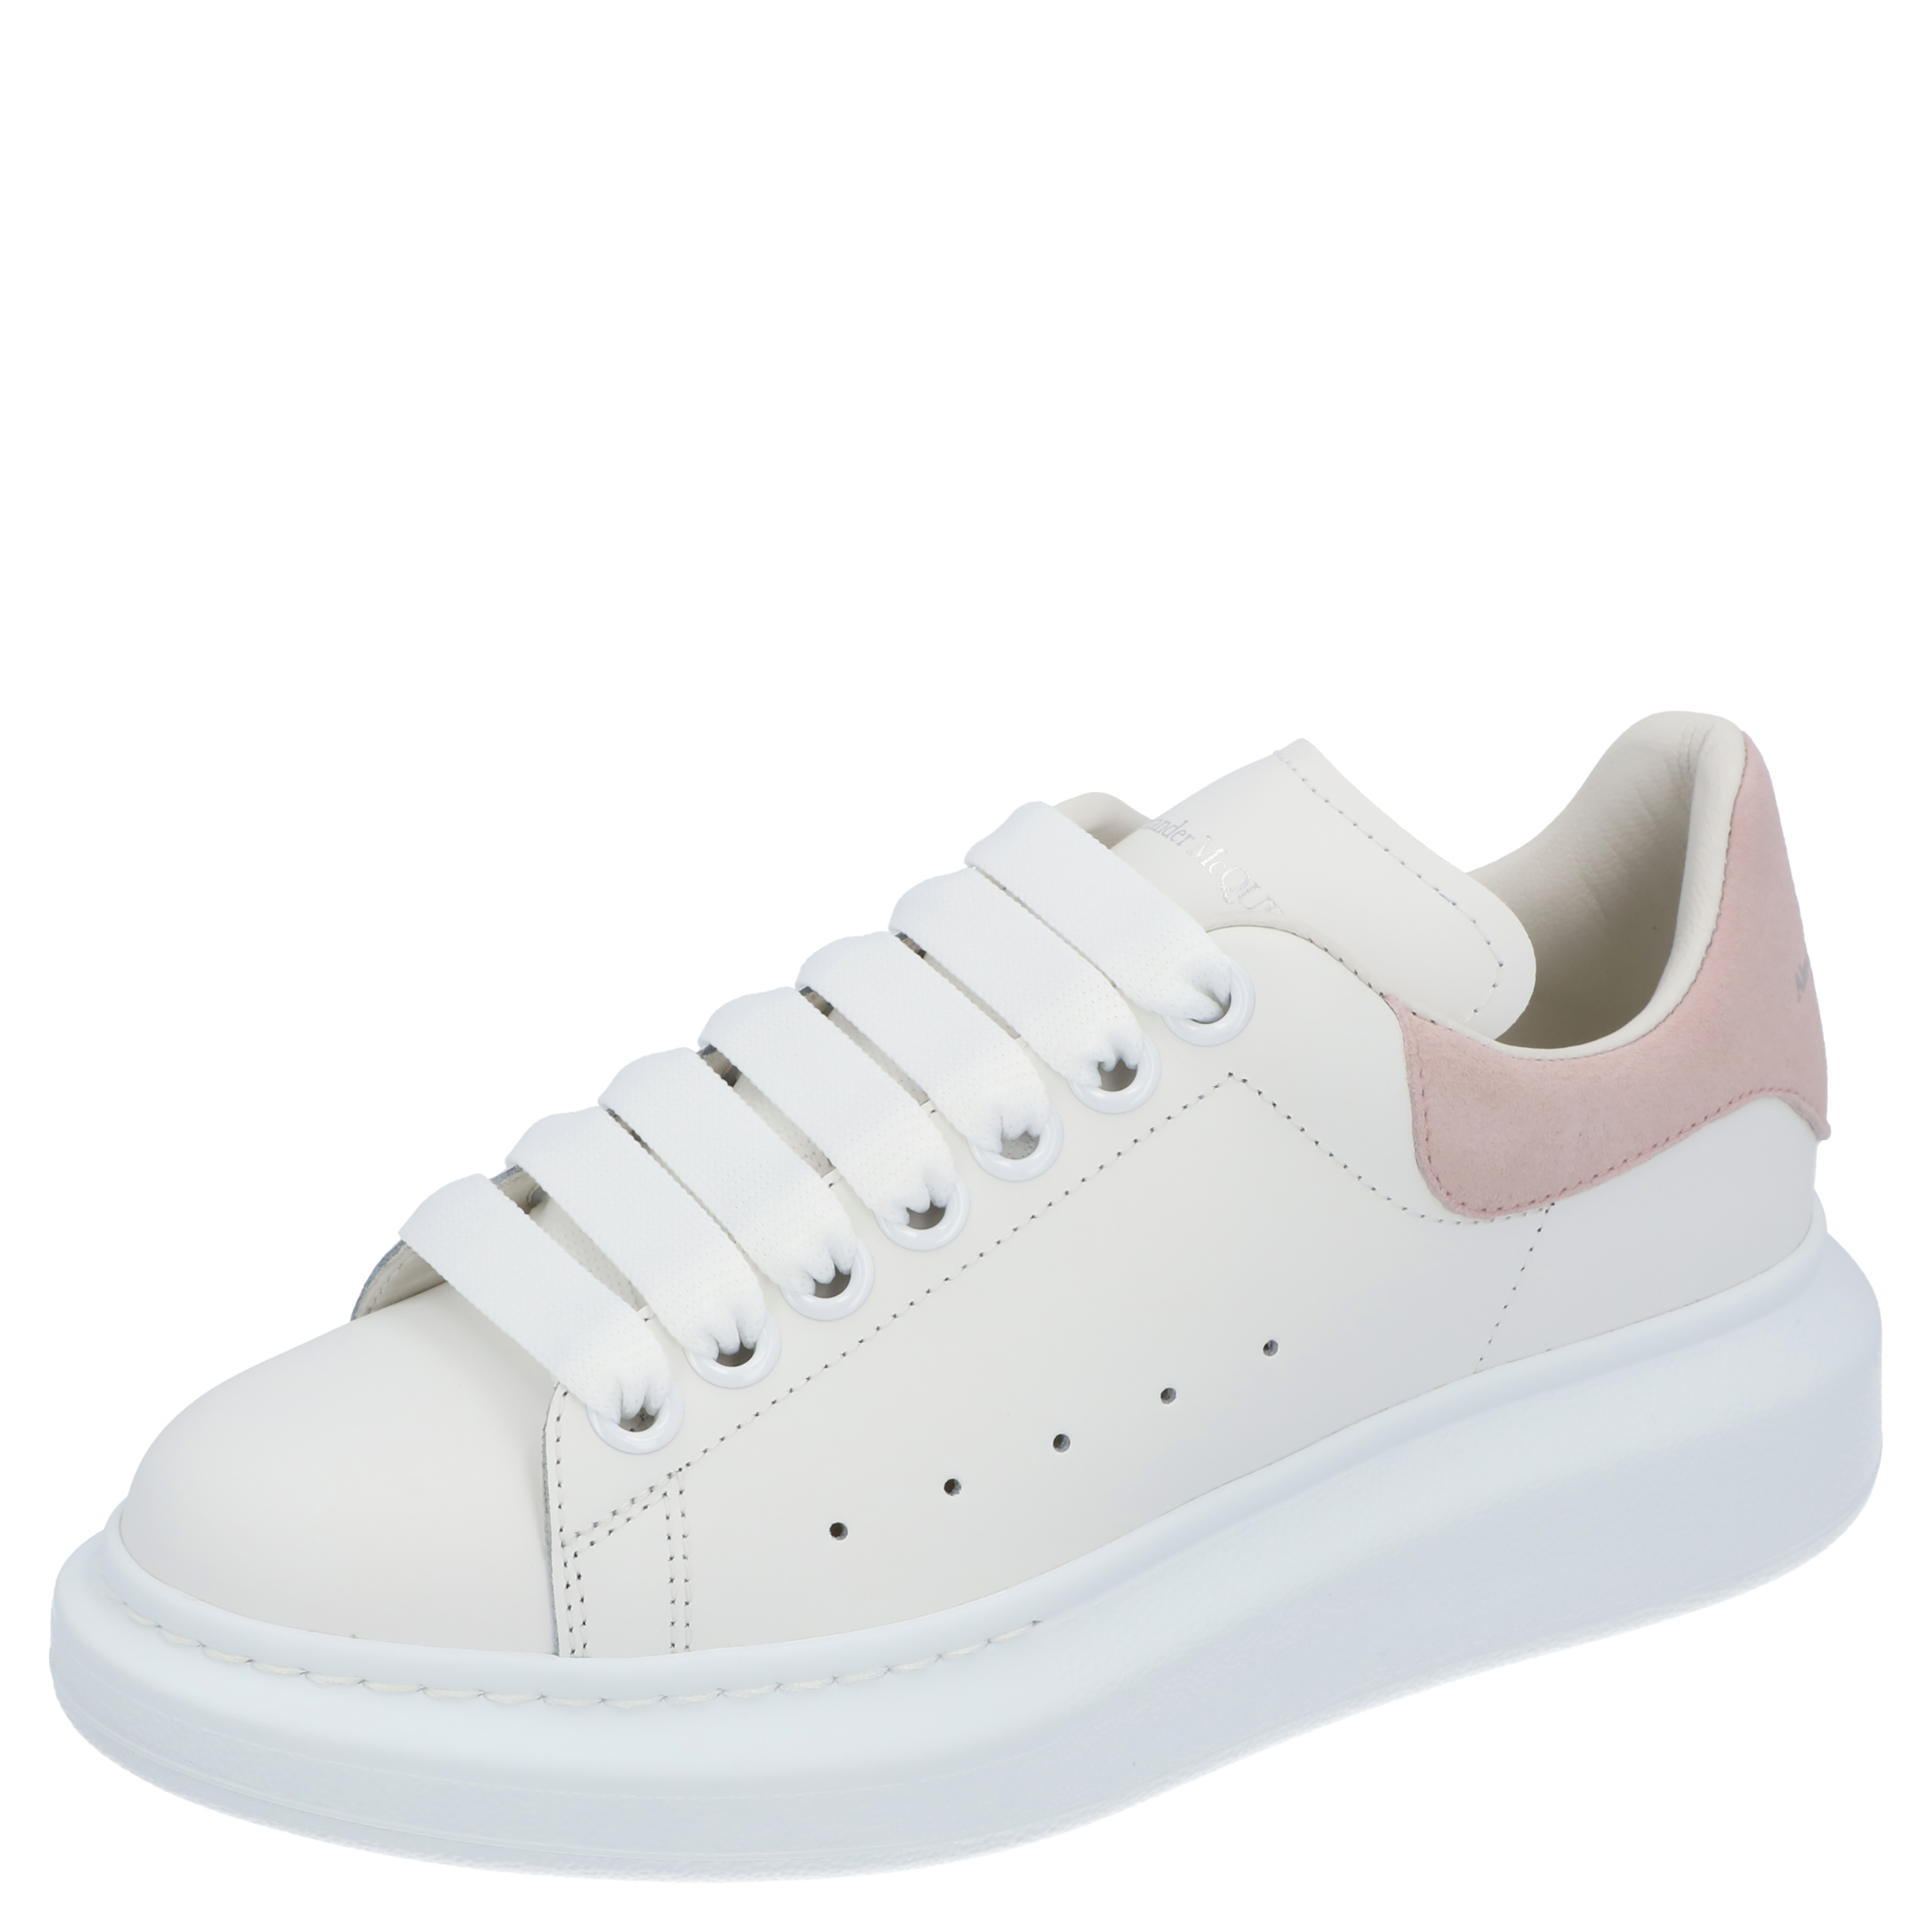 Alexander McQueen White/Pink Oversized Sneakers Size EU 38.5